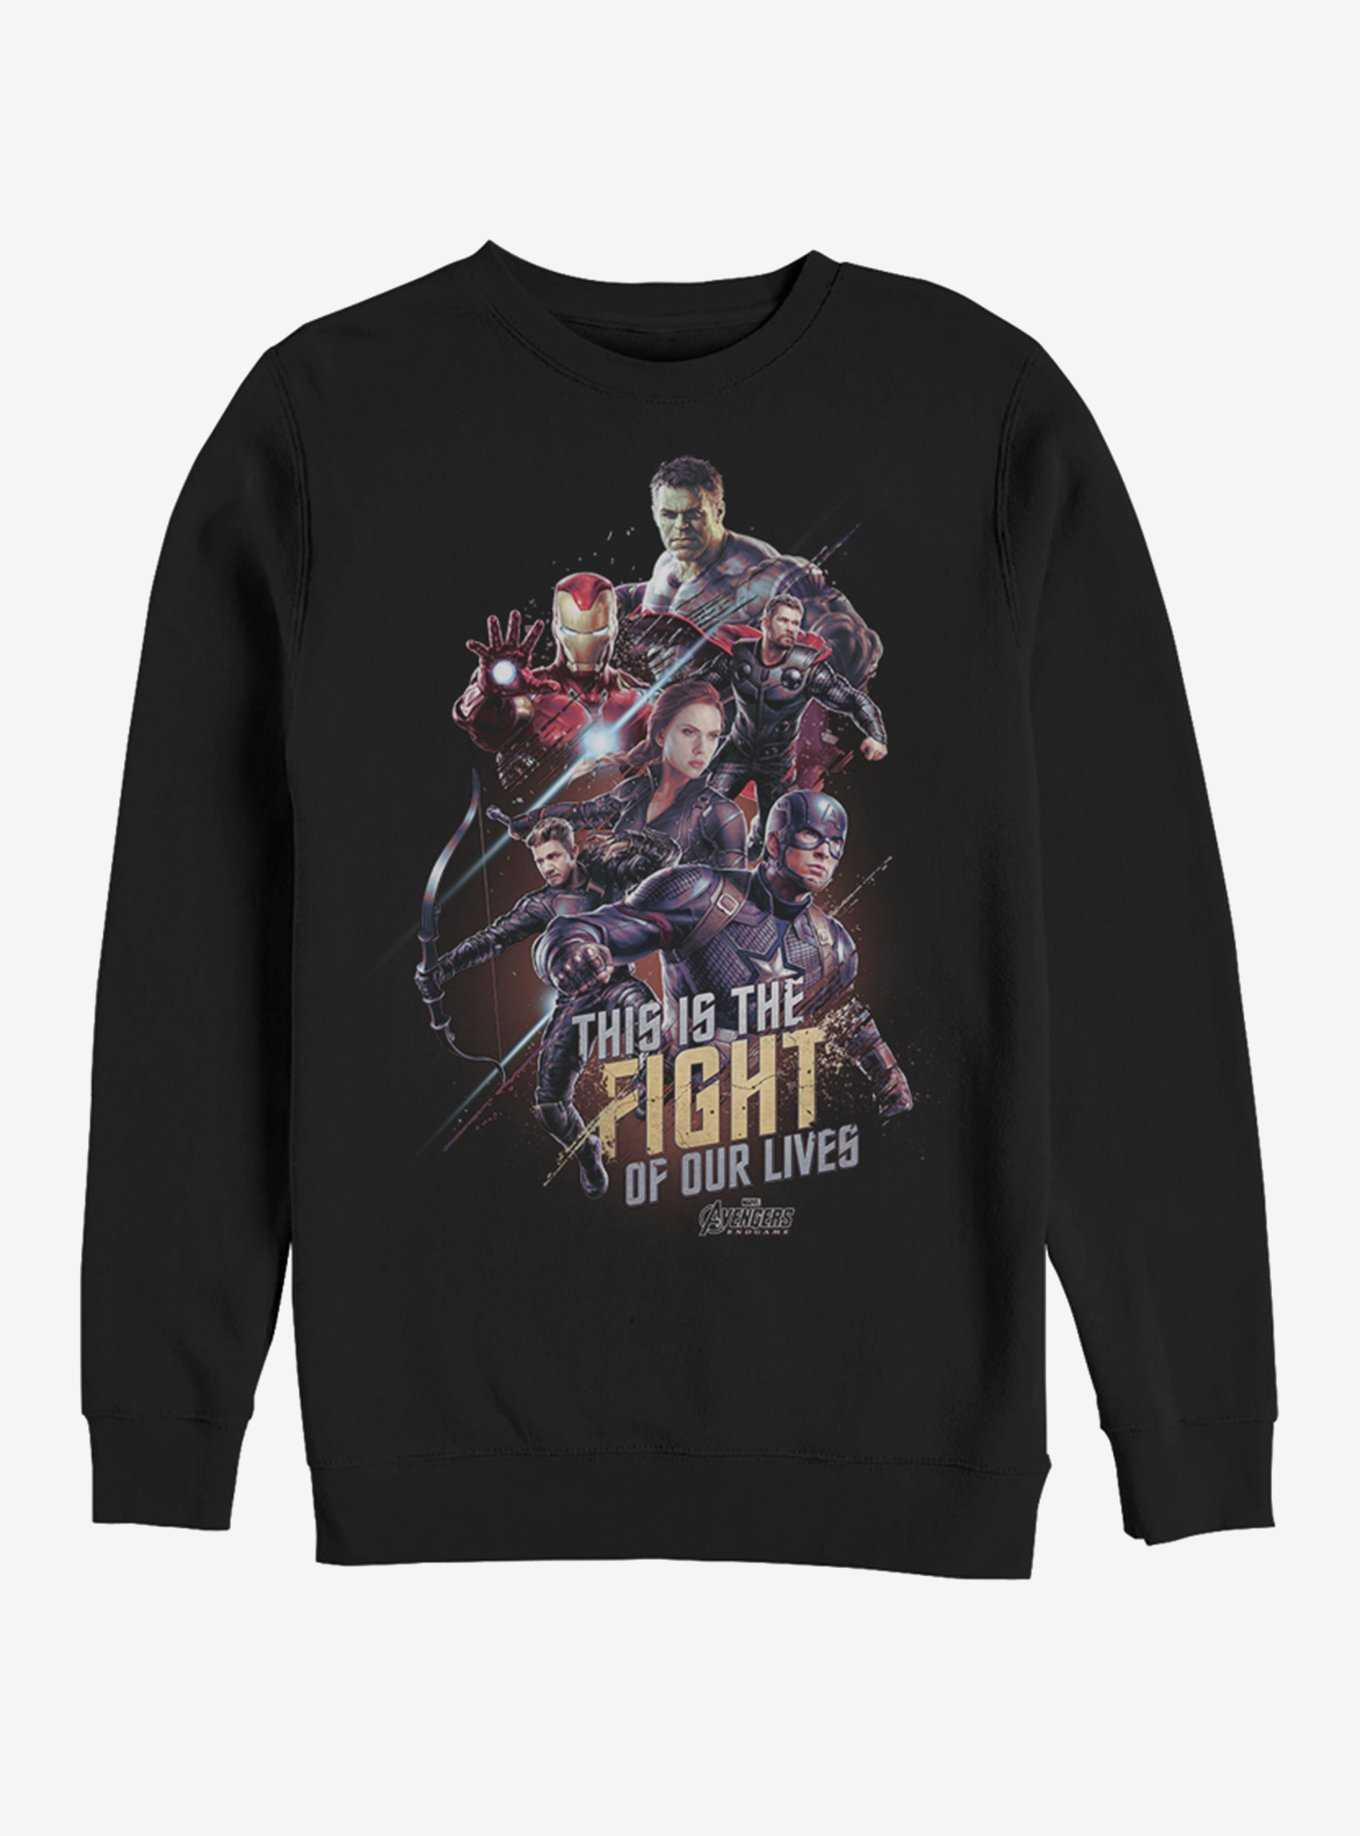 Marvel Avengers: Endgame Life Fight Sweatshirt, , hi-res